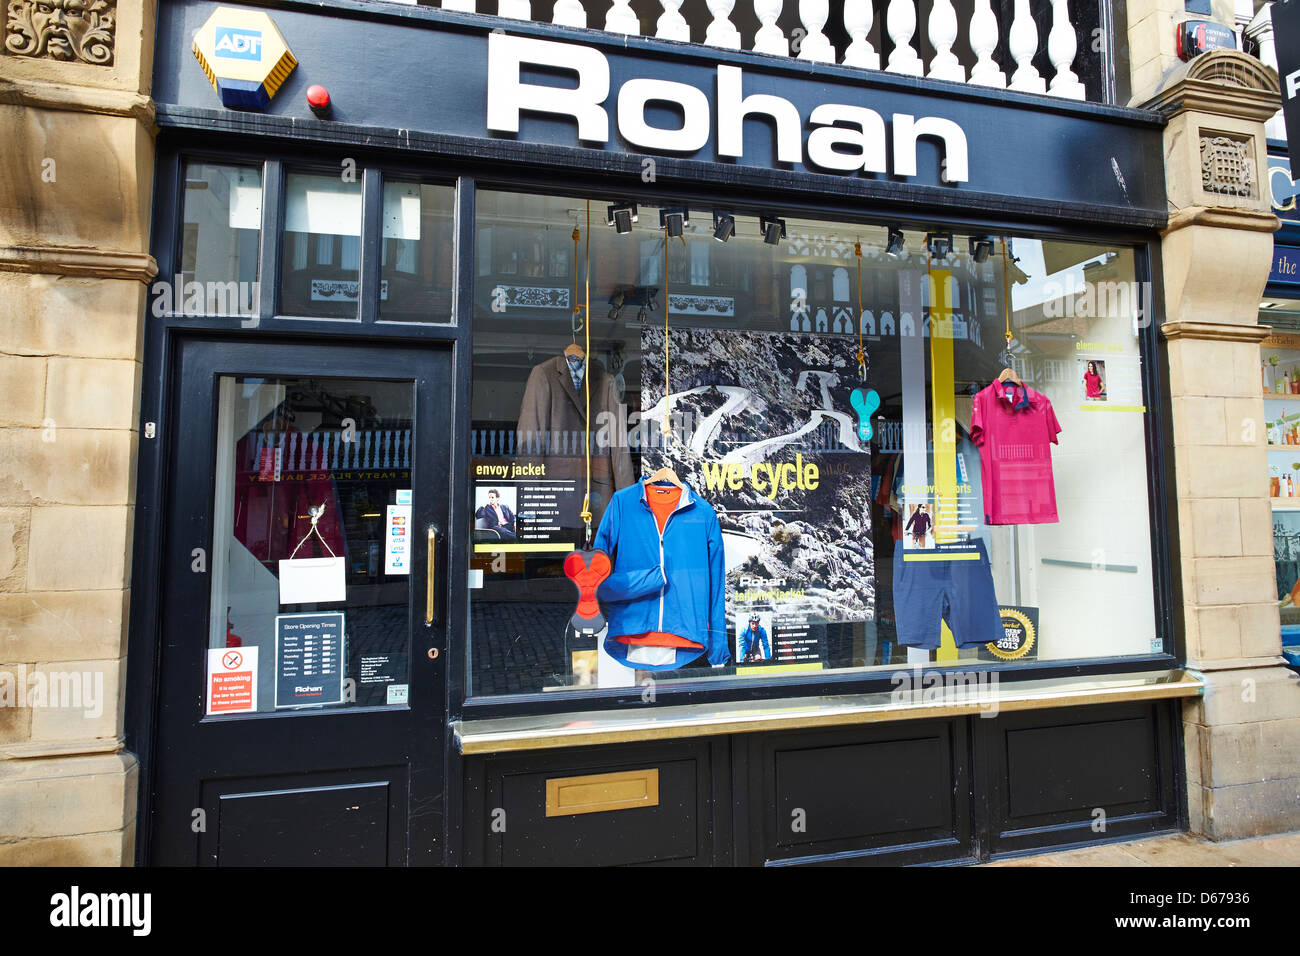 Rohan Outdoor Bekleidung Shop Bridge Street Chester Cheshire UK Stockfoto